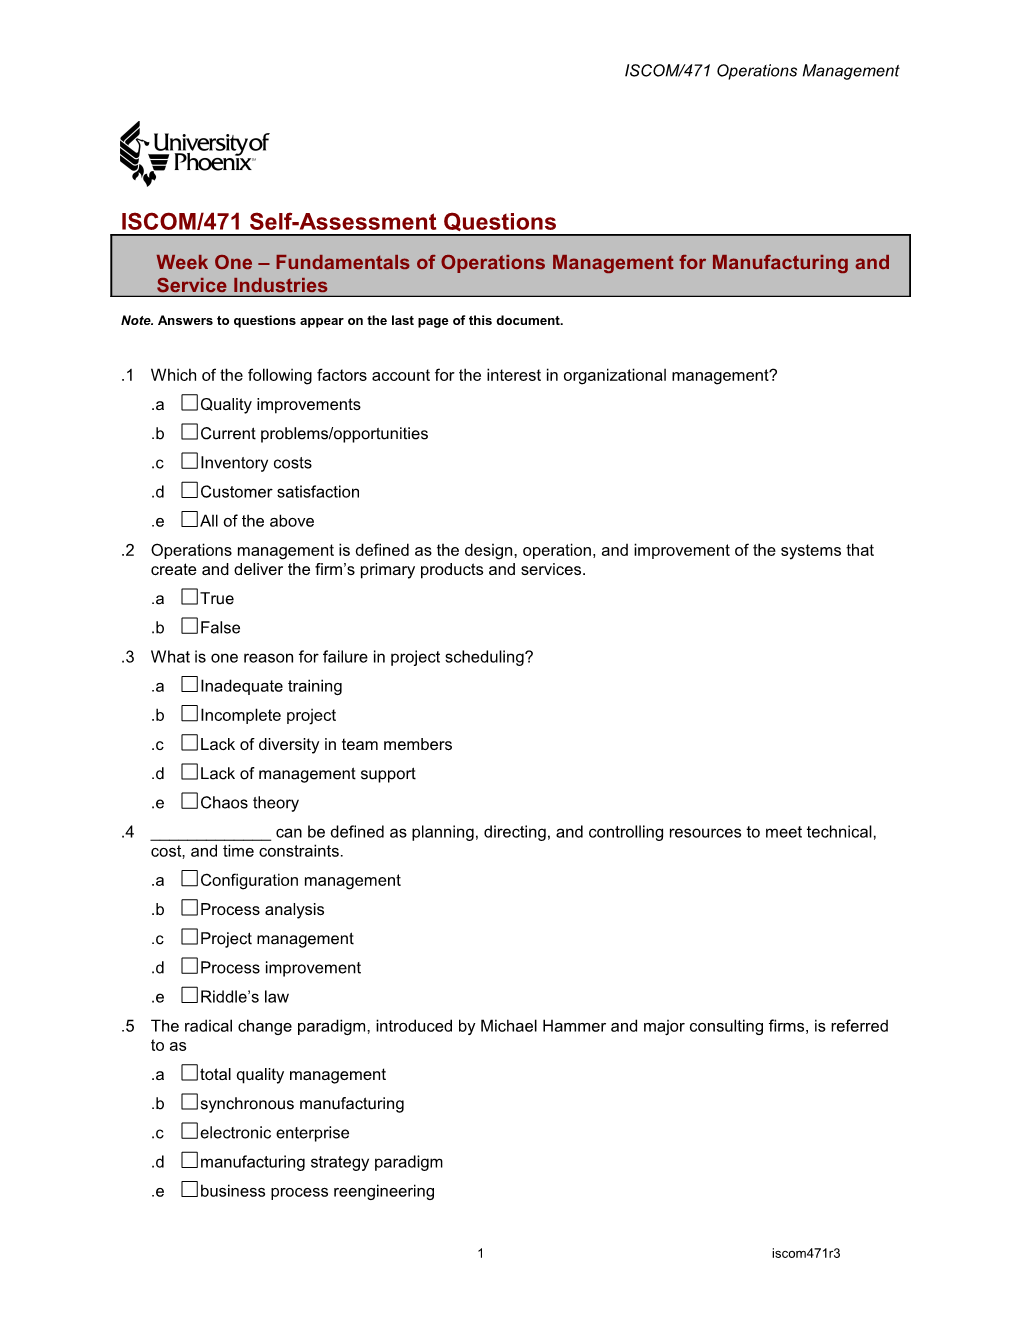 ISCOM/471 Self-Assessment Questions